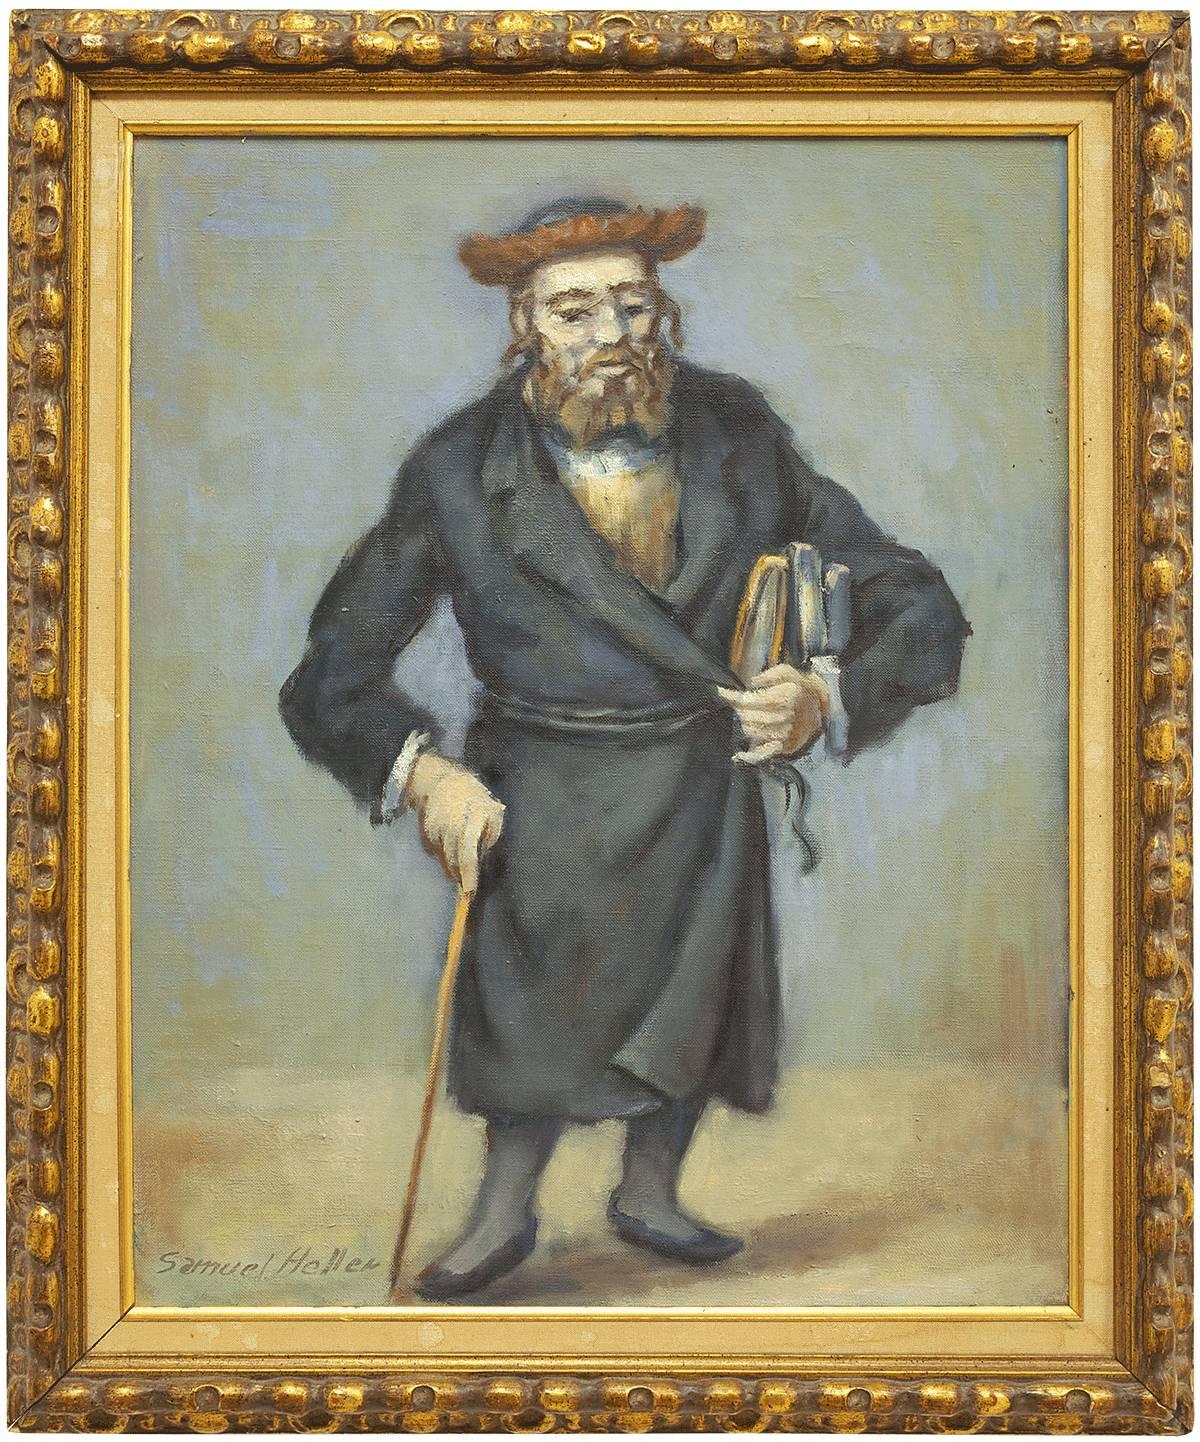 Rare Judaica Rabbi Oil Painting (JEWISH MAN HOLDING A CANE AND BOOKS)